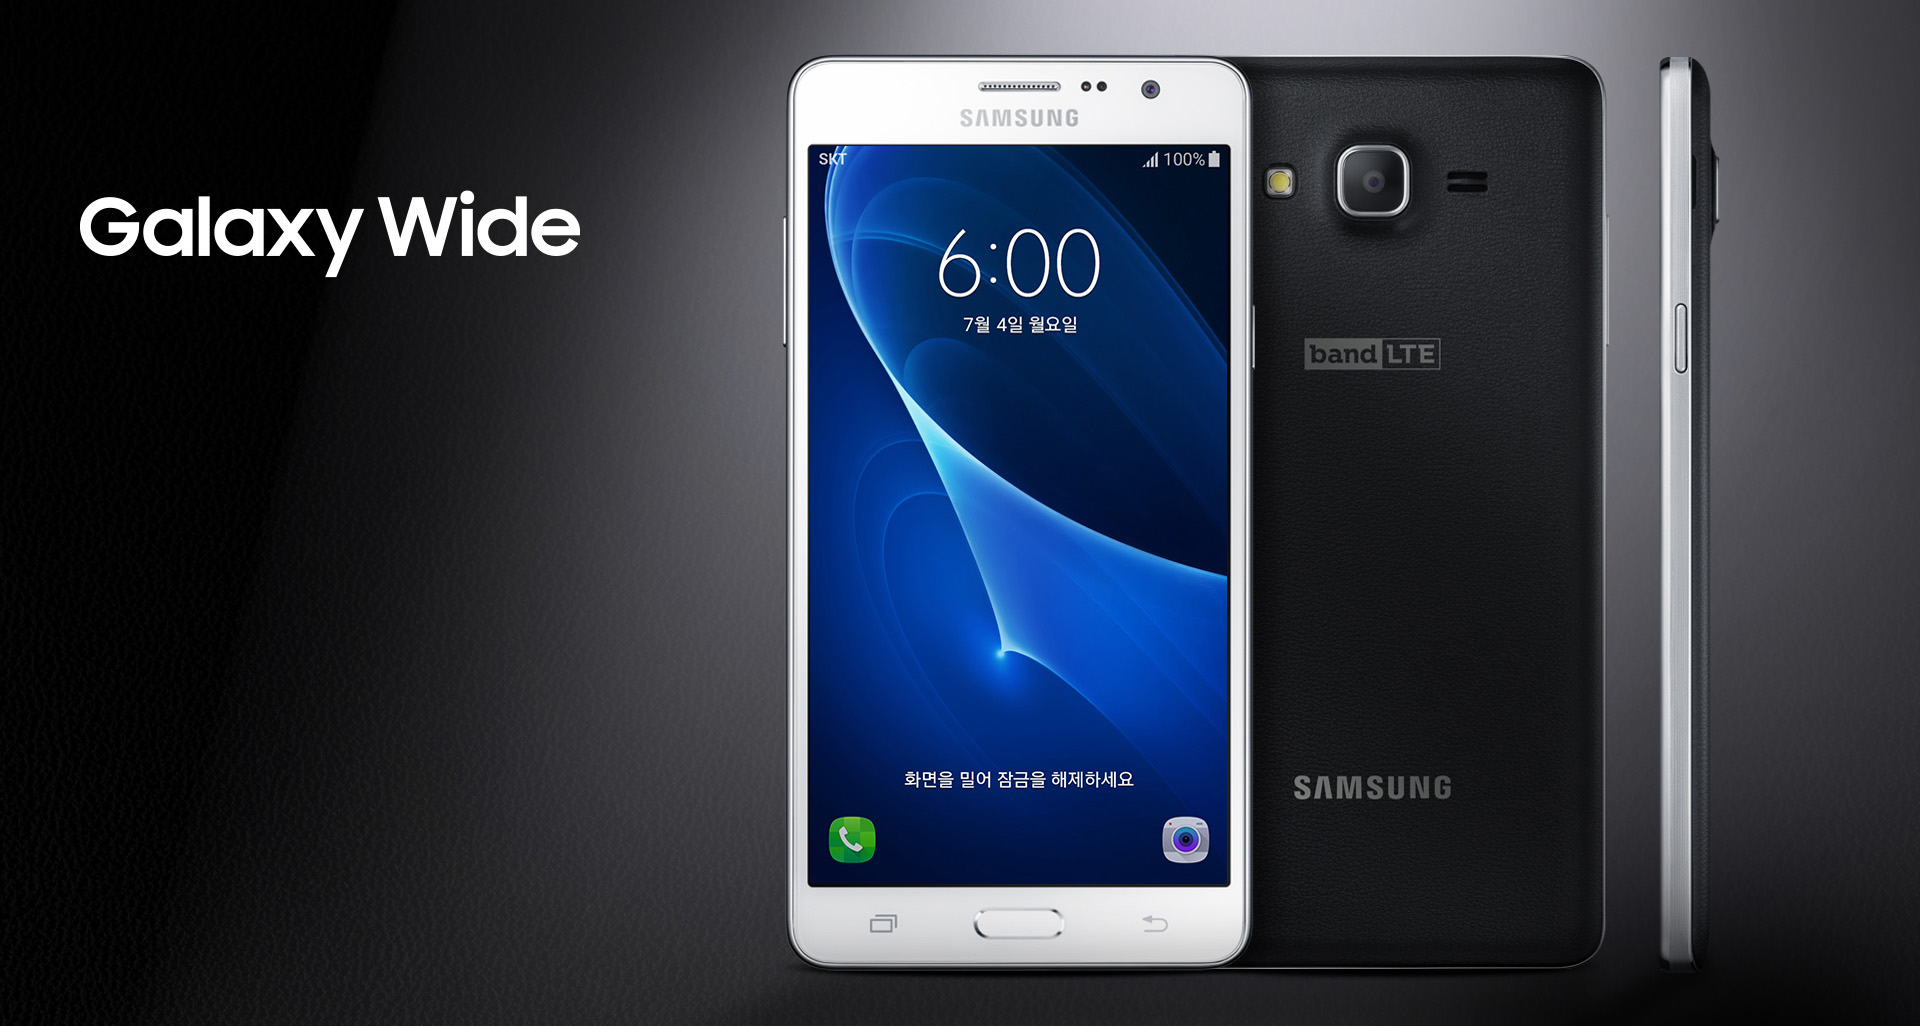 Samsung Galaxy Wide smartphone